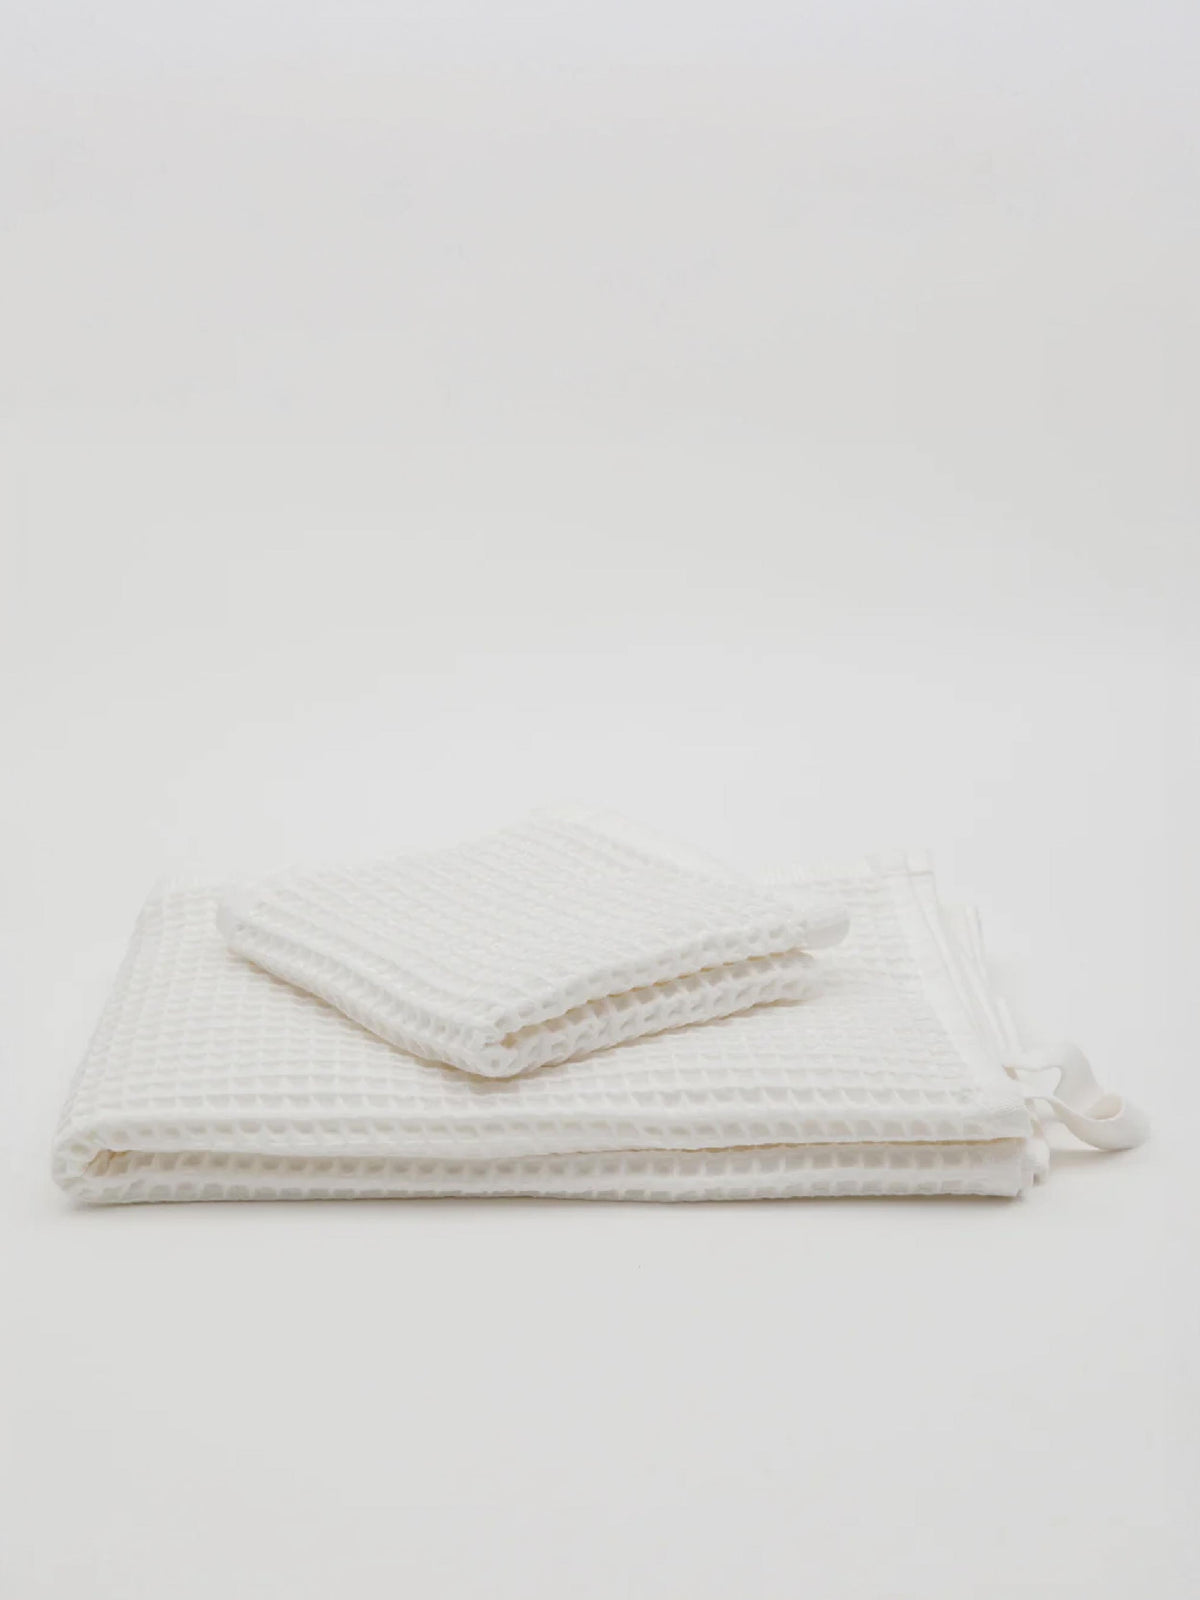 Olivia Bath Towel in White